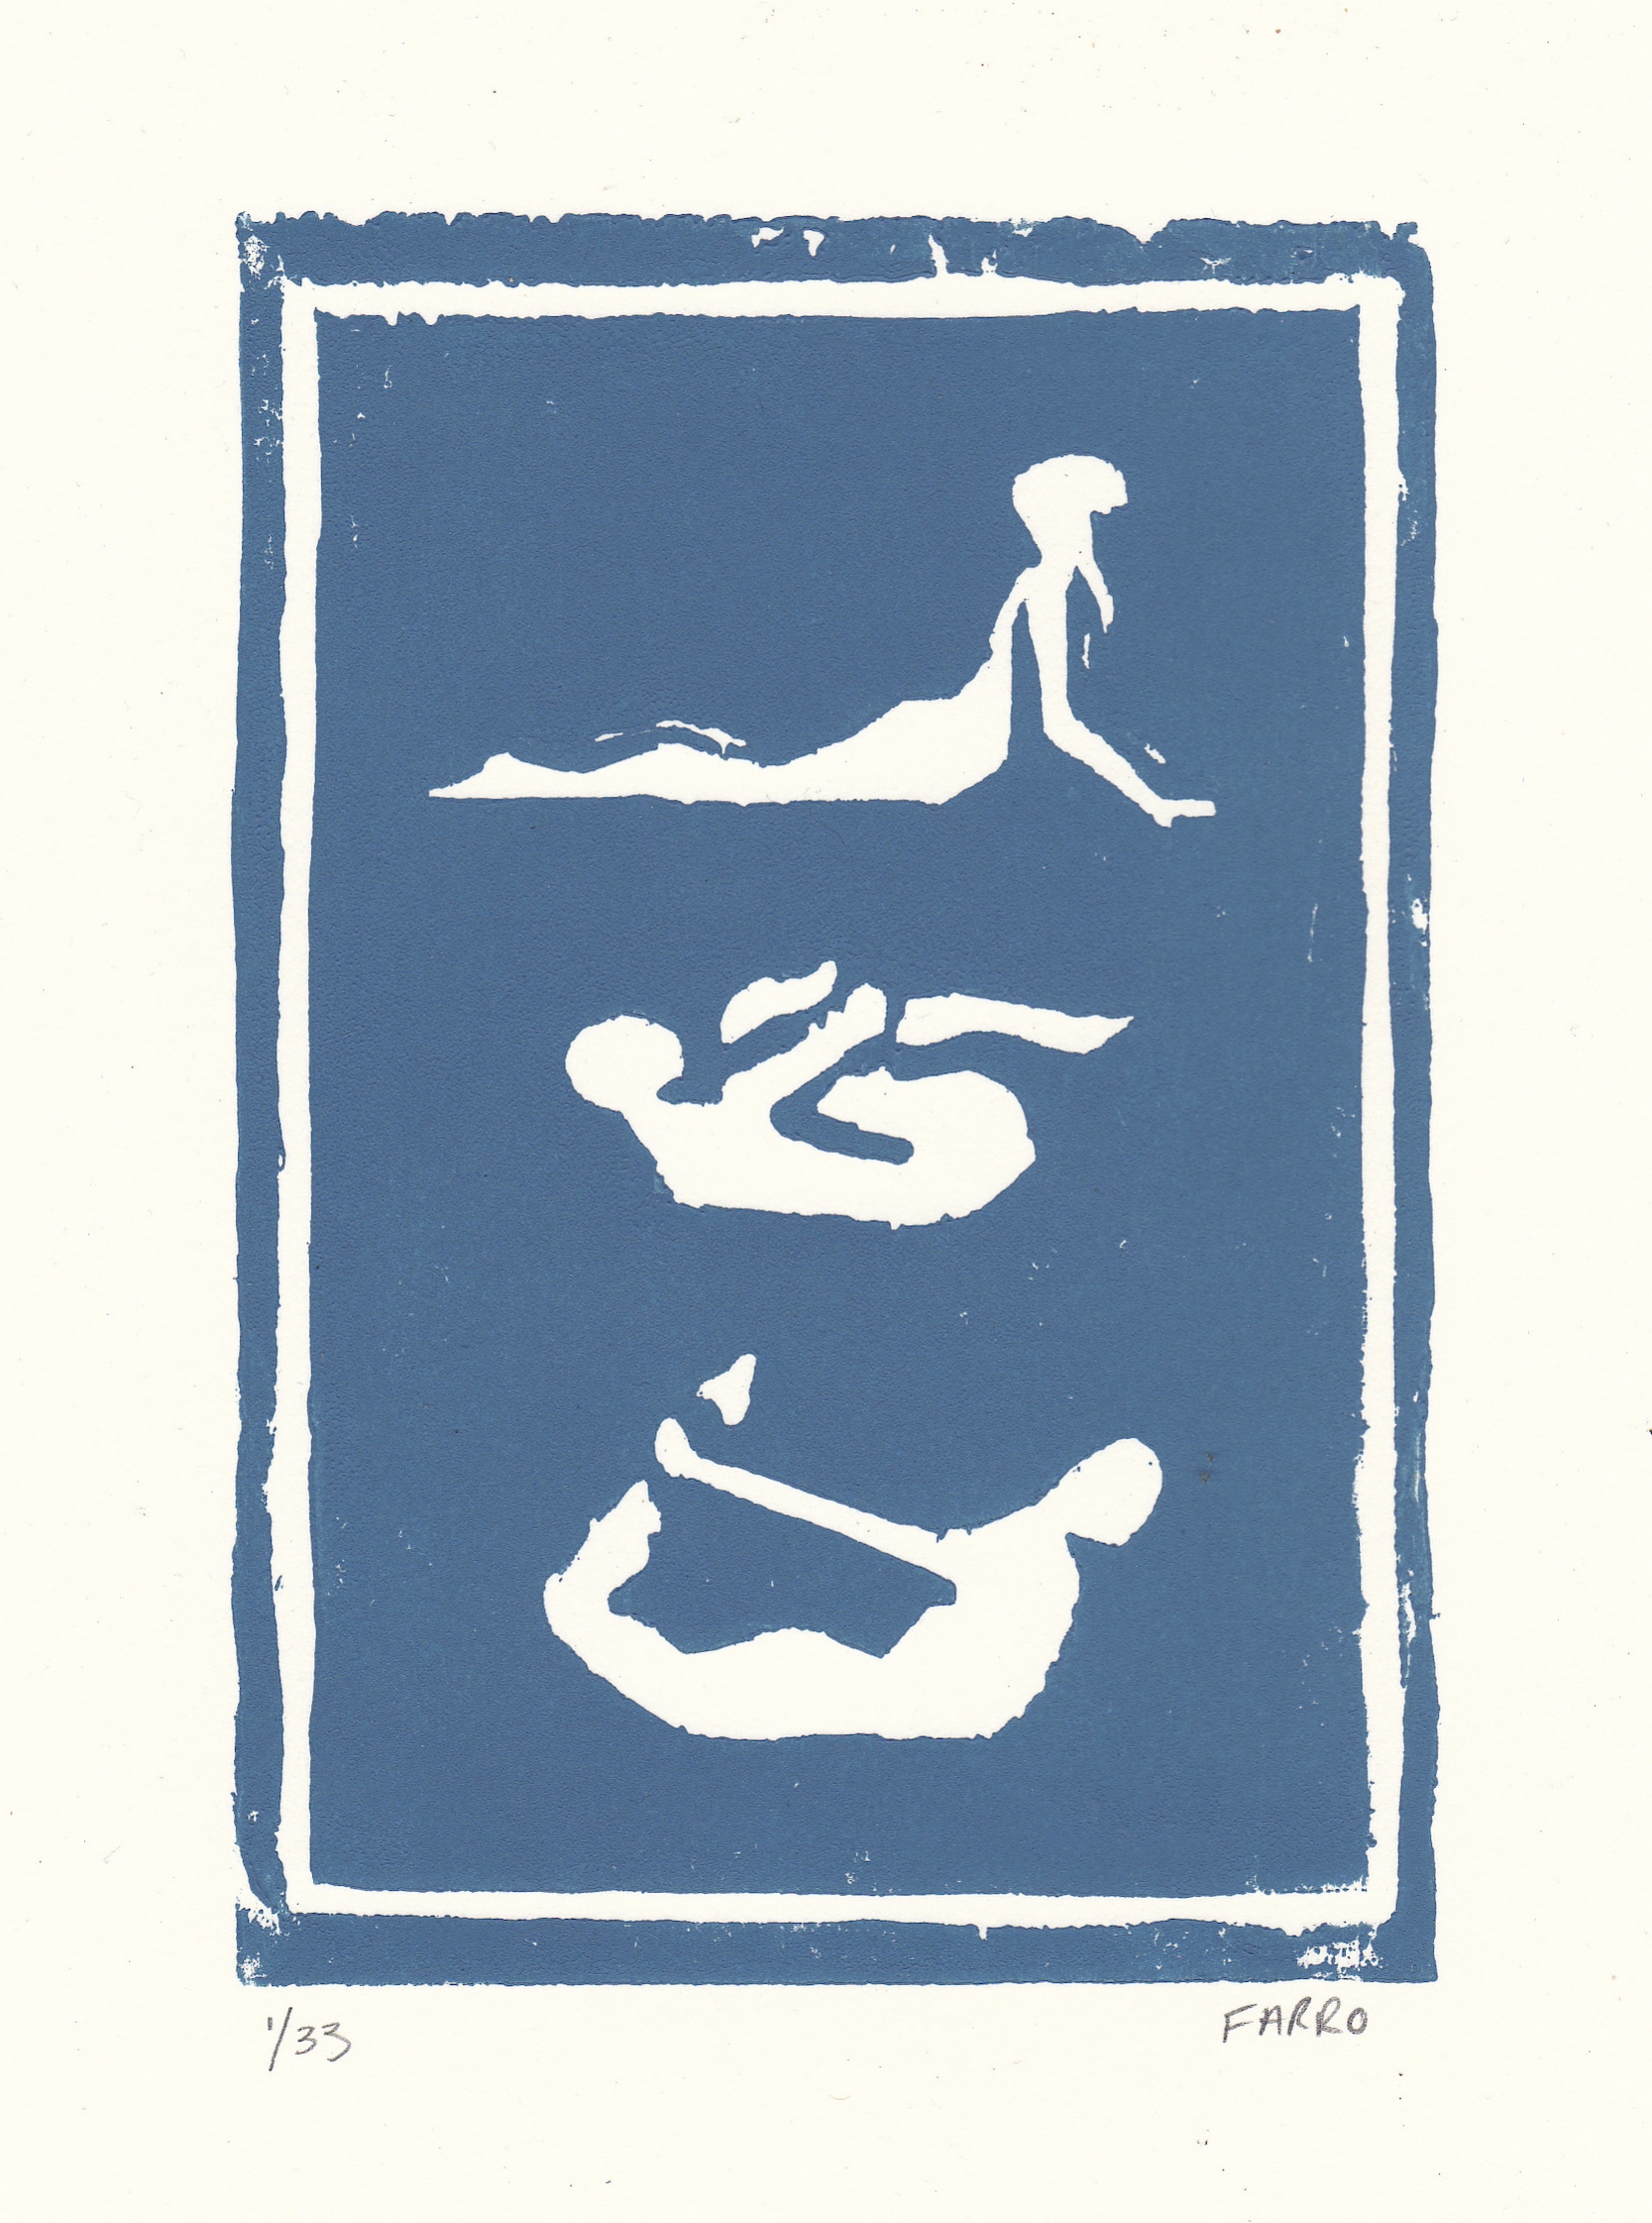   yoga poses  woodblock print edition of 33 5x7" 2011 